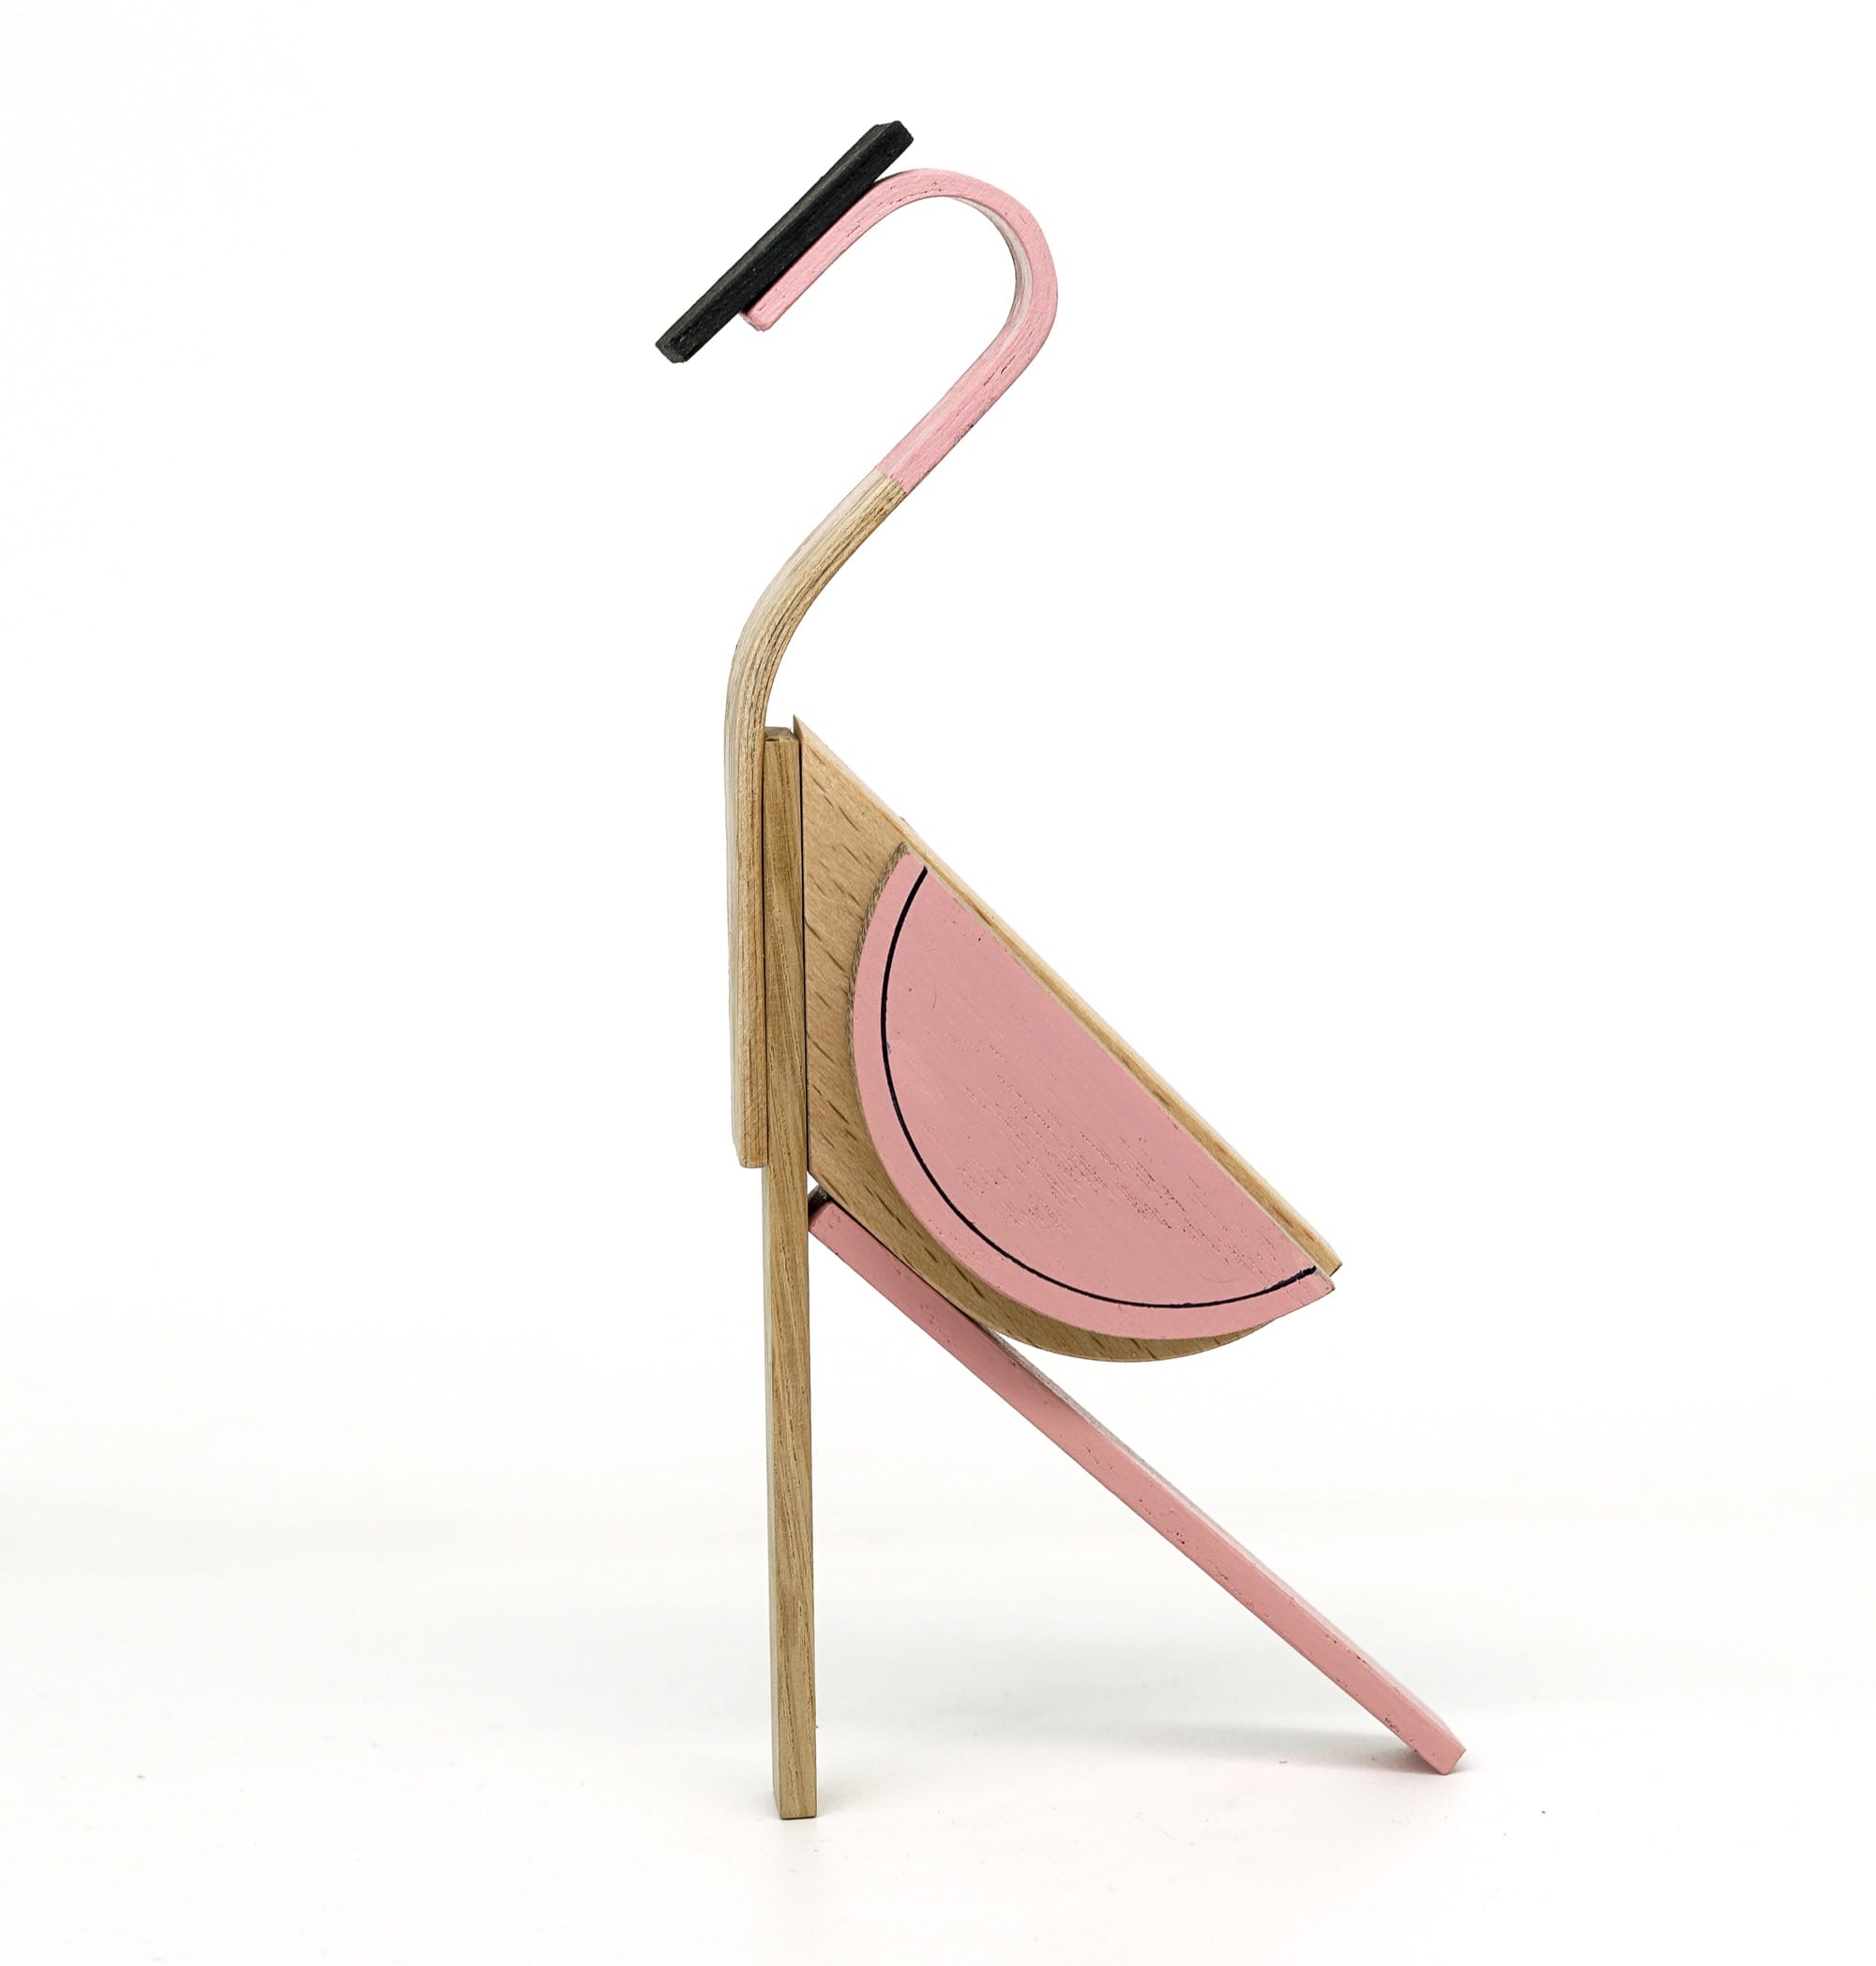 a geometric wooden toy shaped like a modular pink flamingo